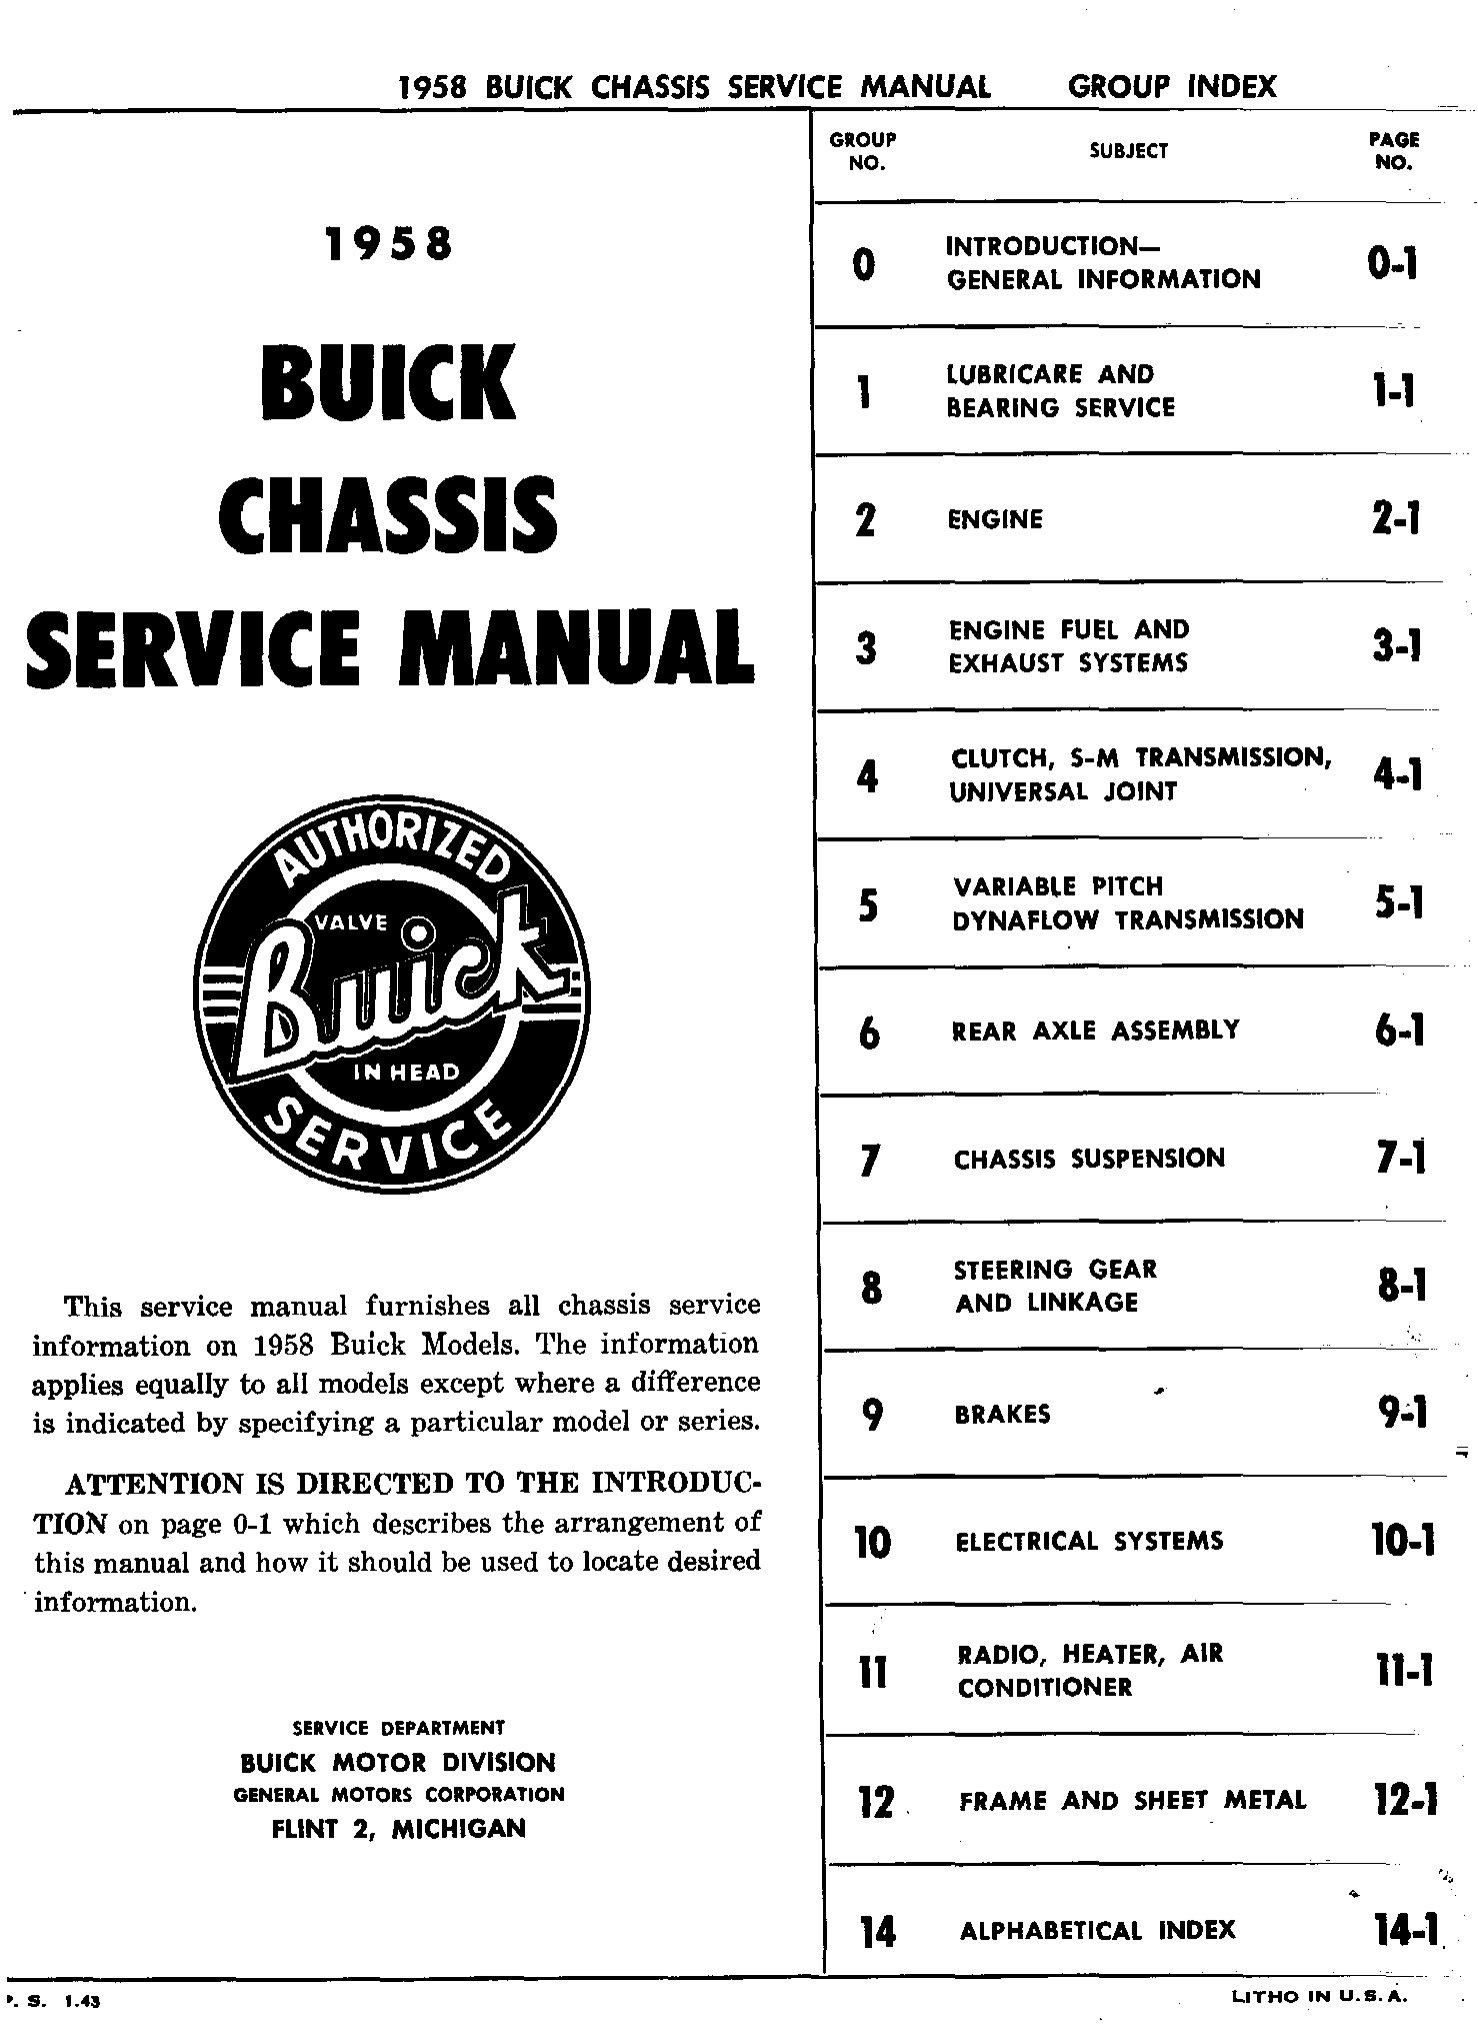 n_01 1958 Buick Shop Manual - Gen Information_1.jpg